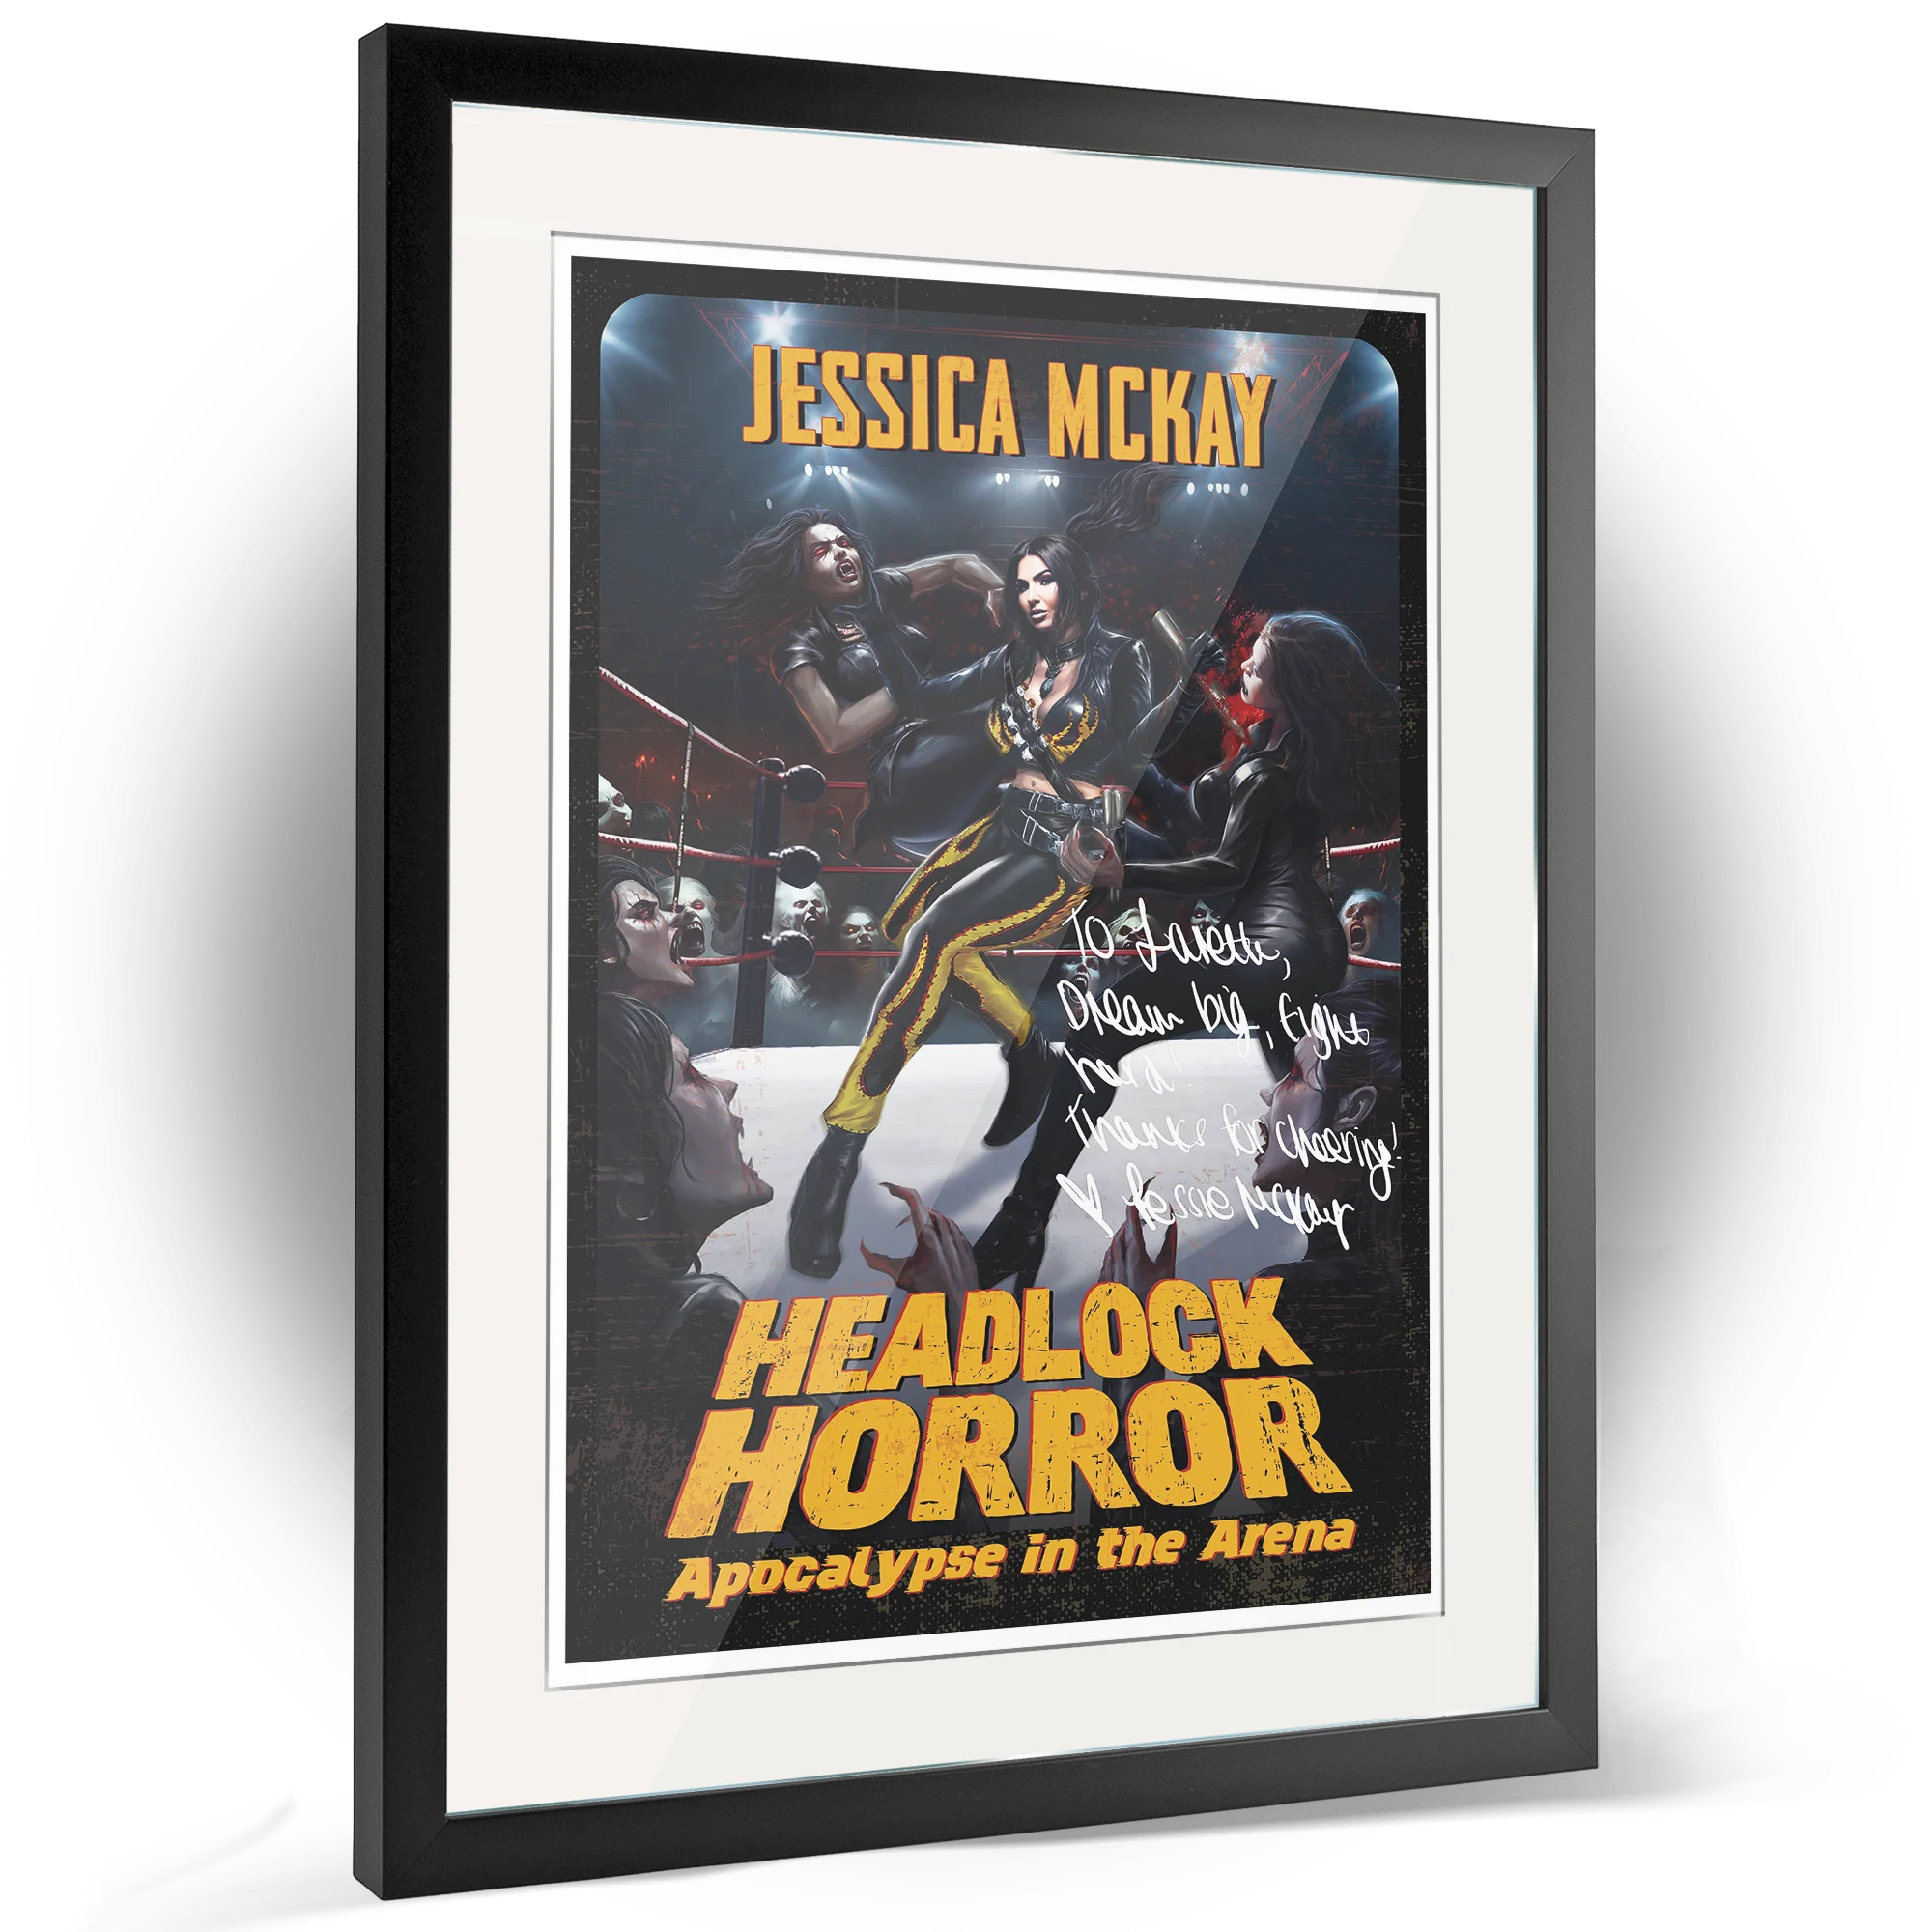 Jessica McKay